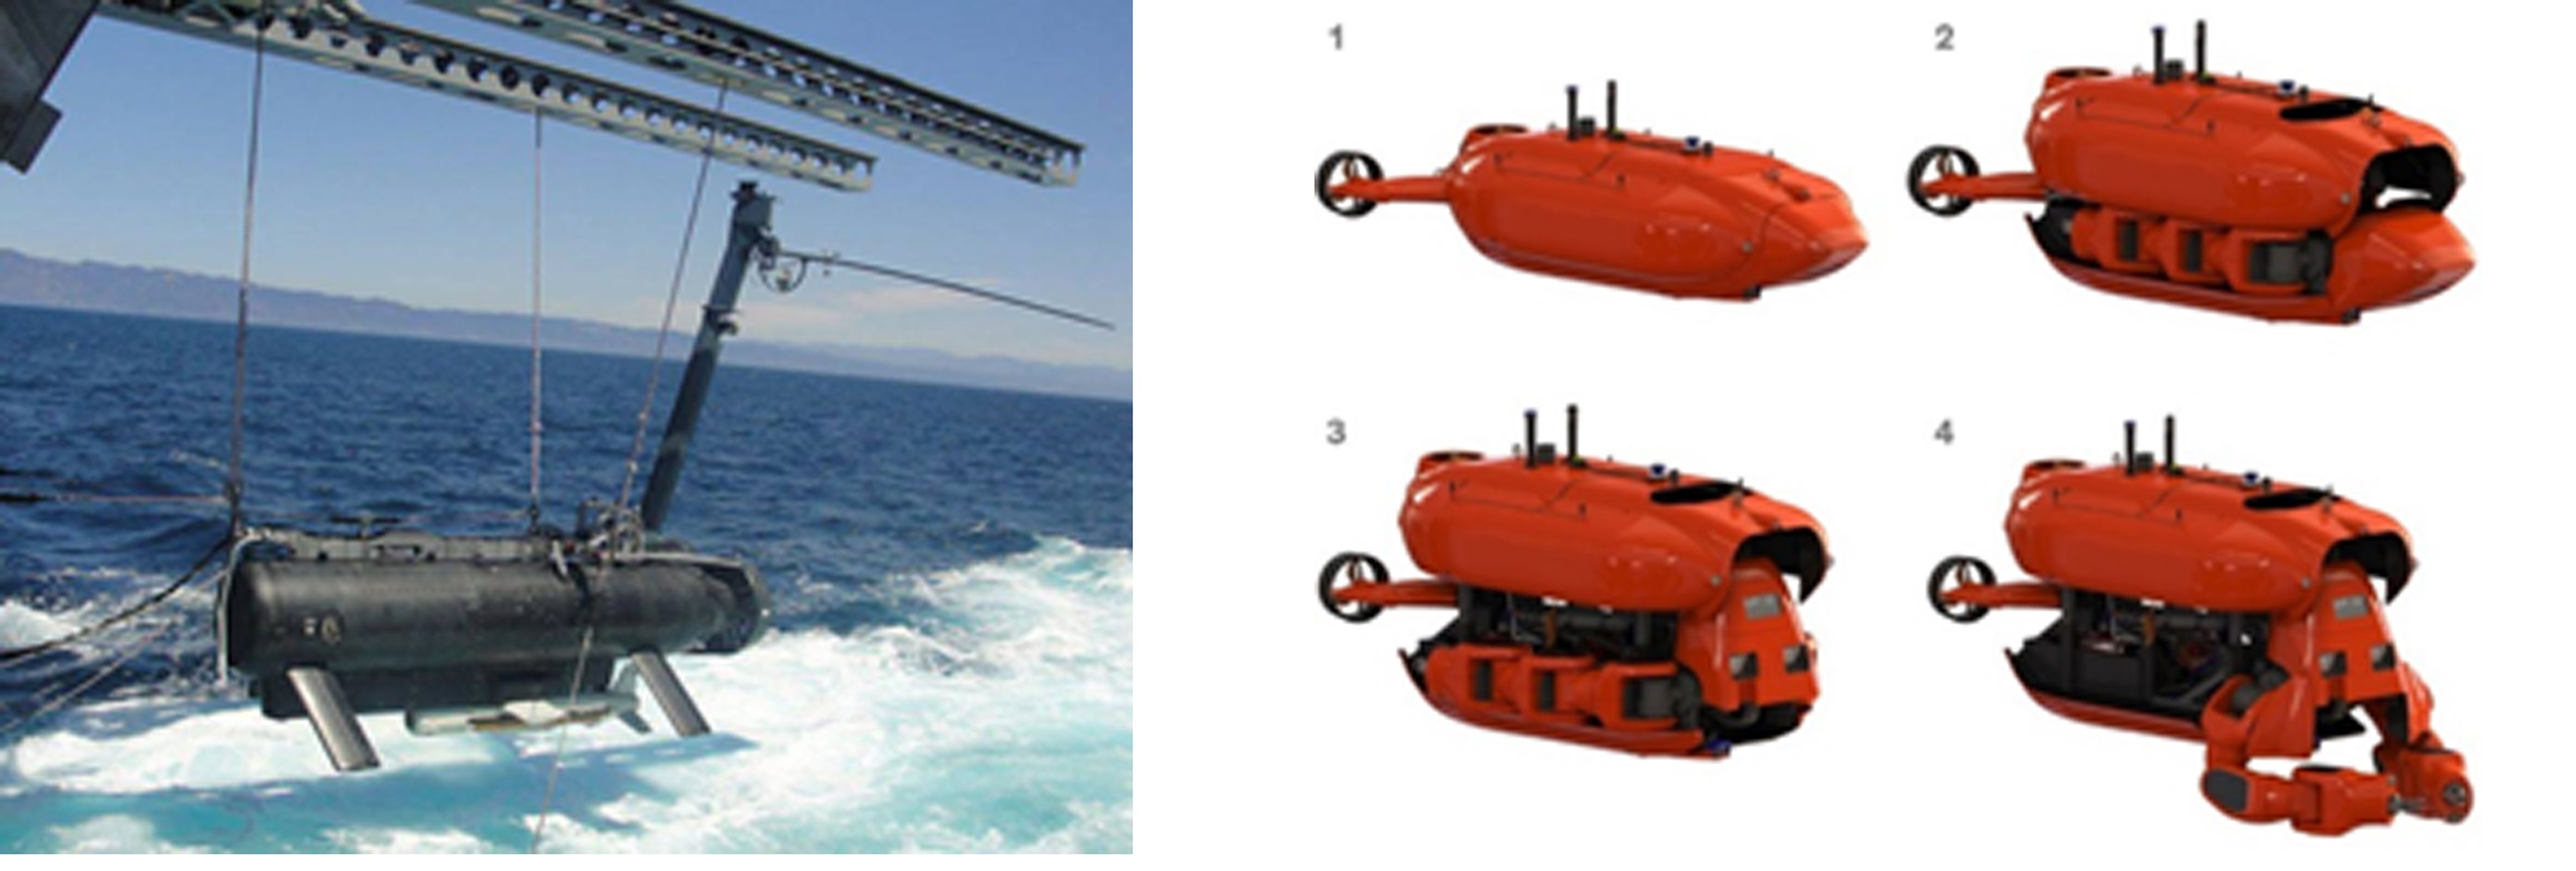 Система поиска мин «Remote Mine-hunting System» (Lockheed Martin, США), автономное подводное средство «Aquanaut» (Houston Mechatronics, США) [11]